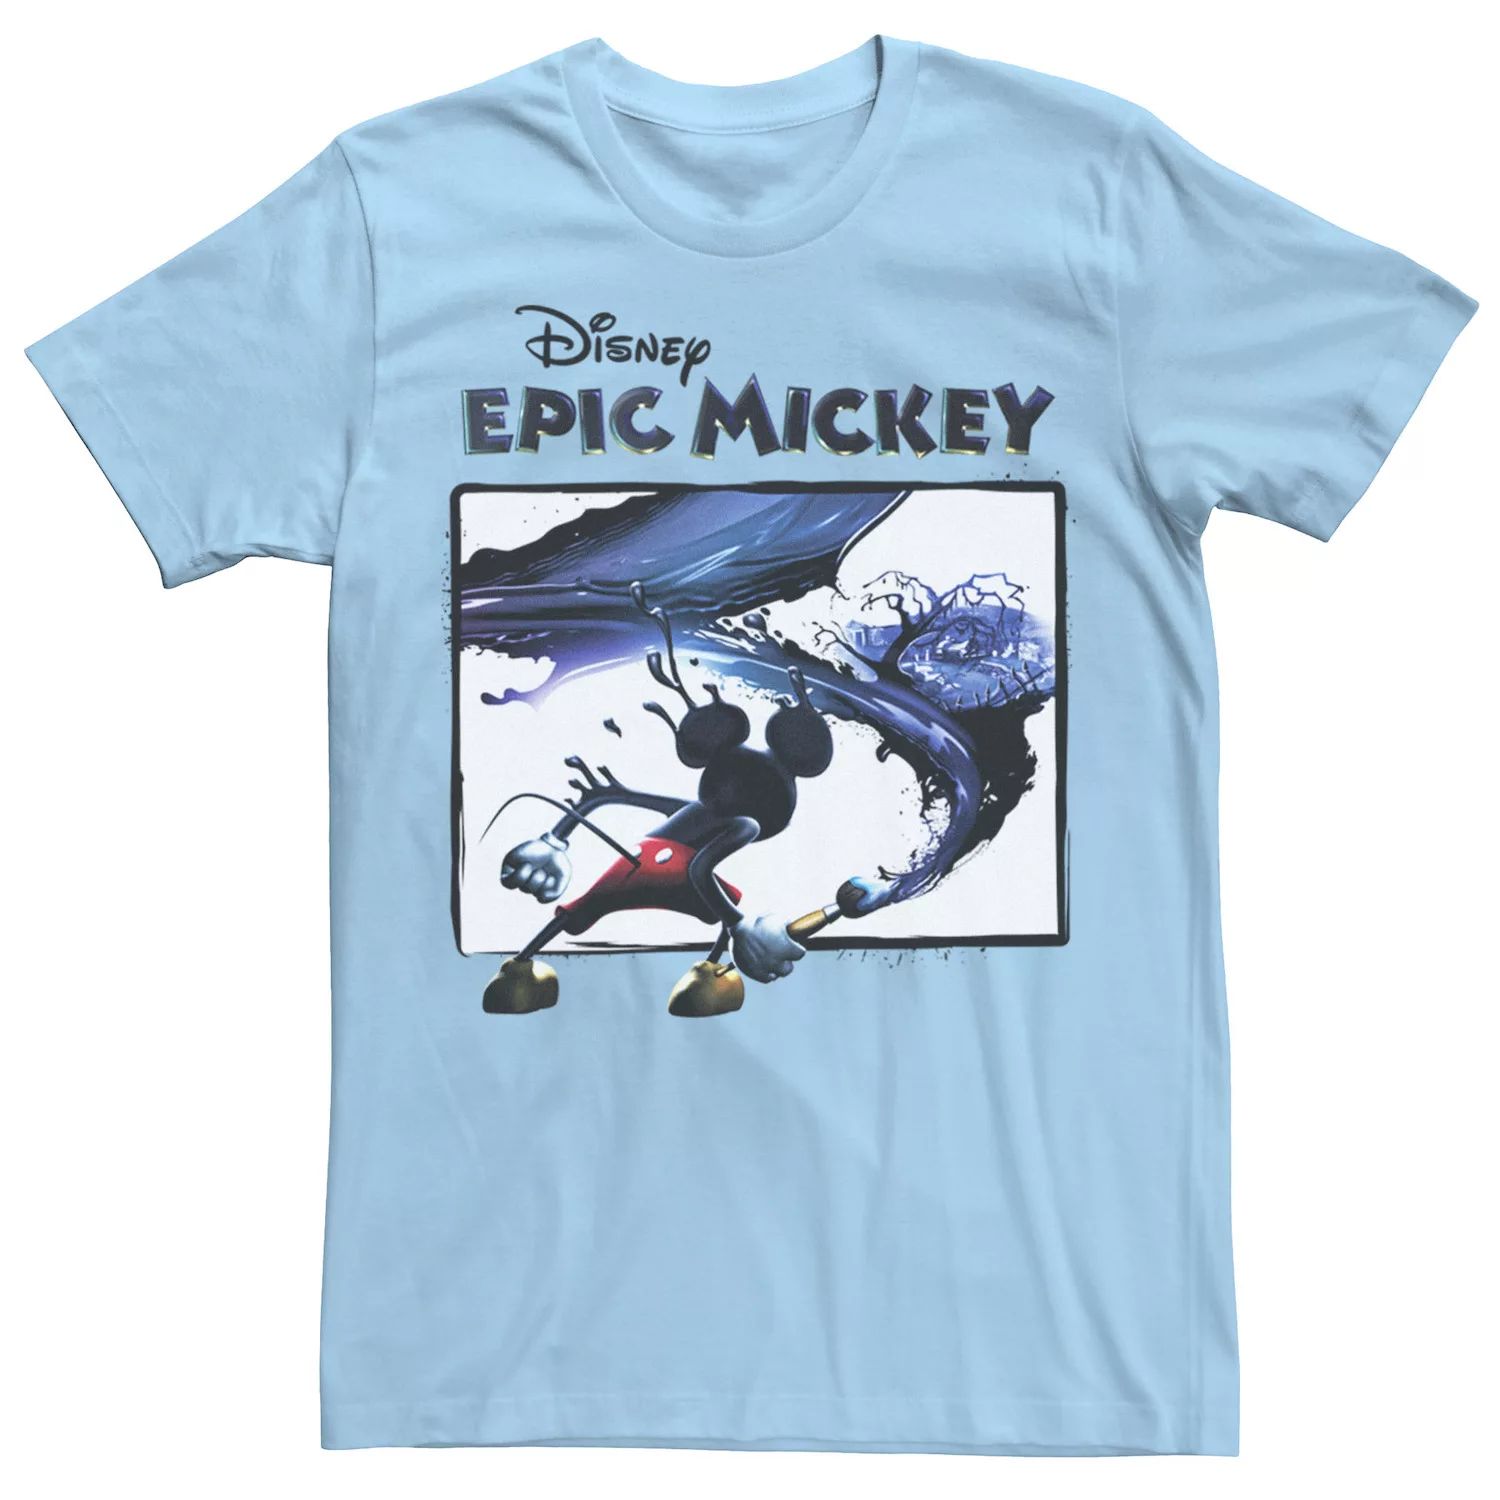 Мужская футболка с портретом Disney Epic Mickey Painting Licensed Character мужская футболка disney epic mickey and oswald со вставками licensed character